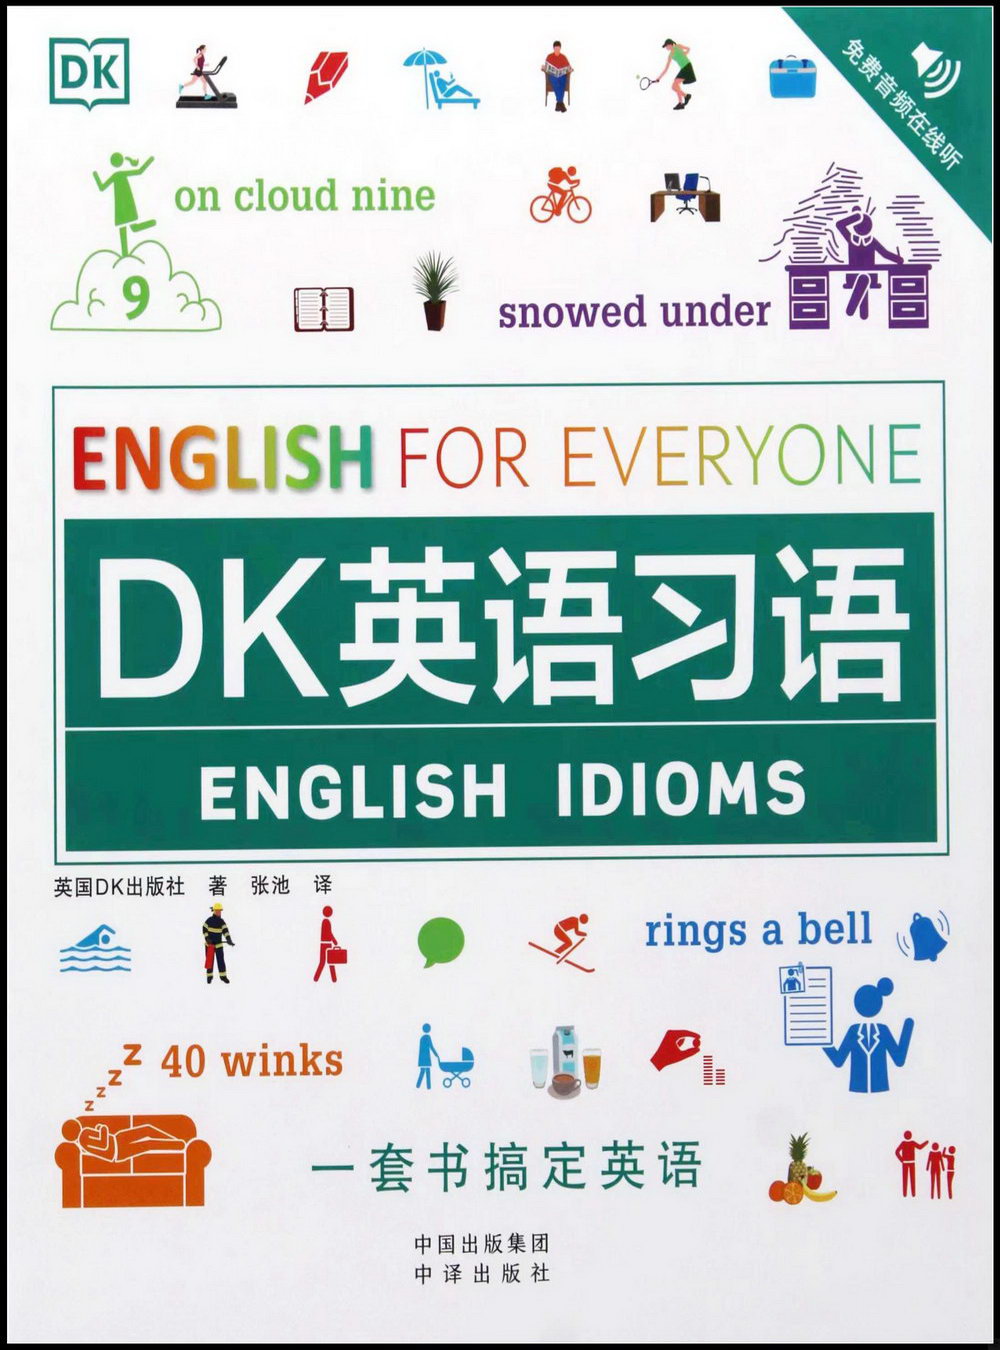 DK英語習語